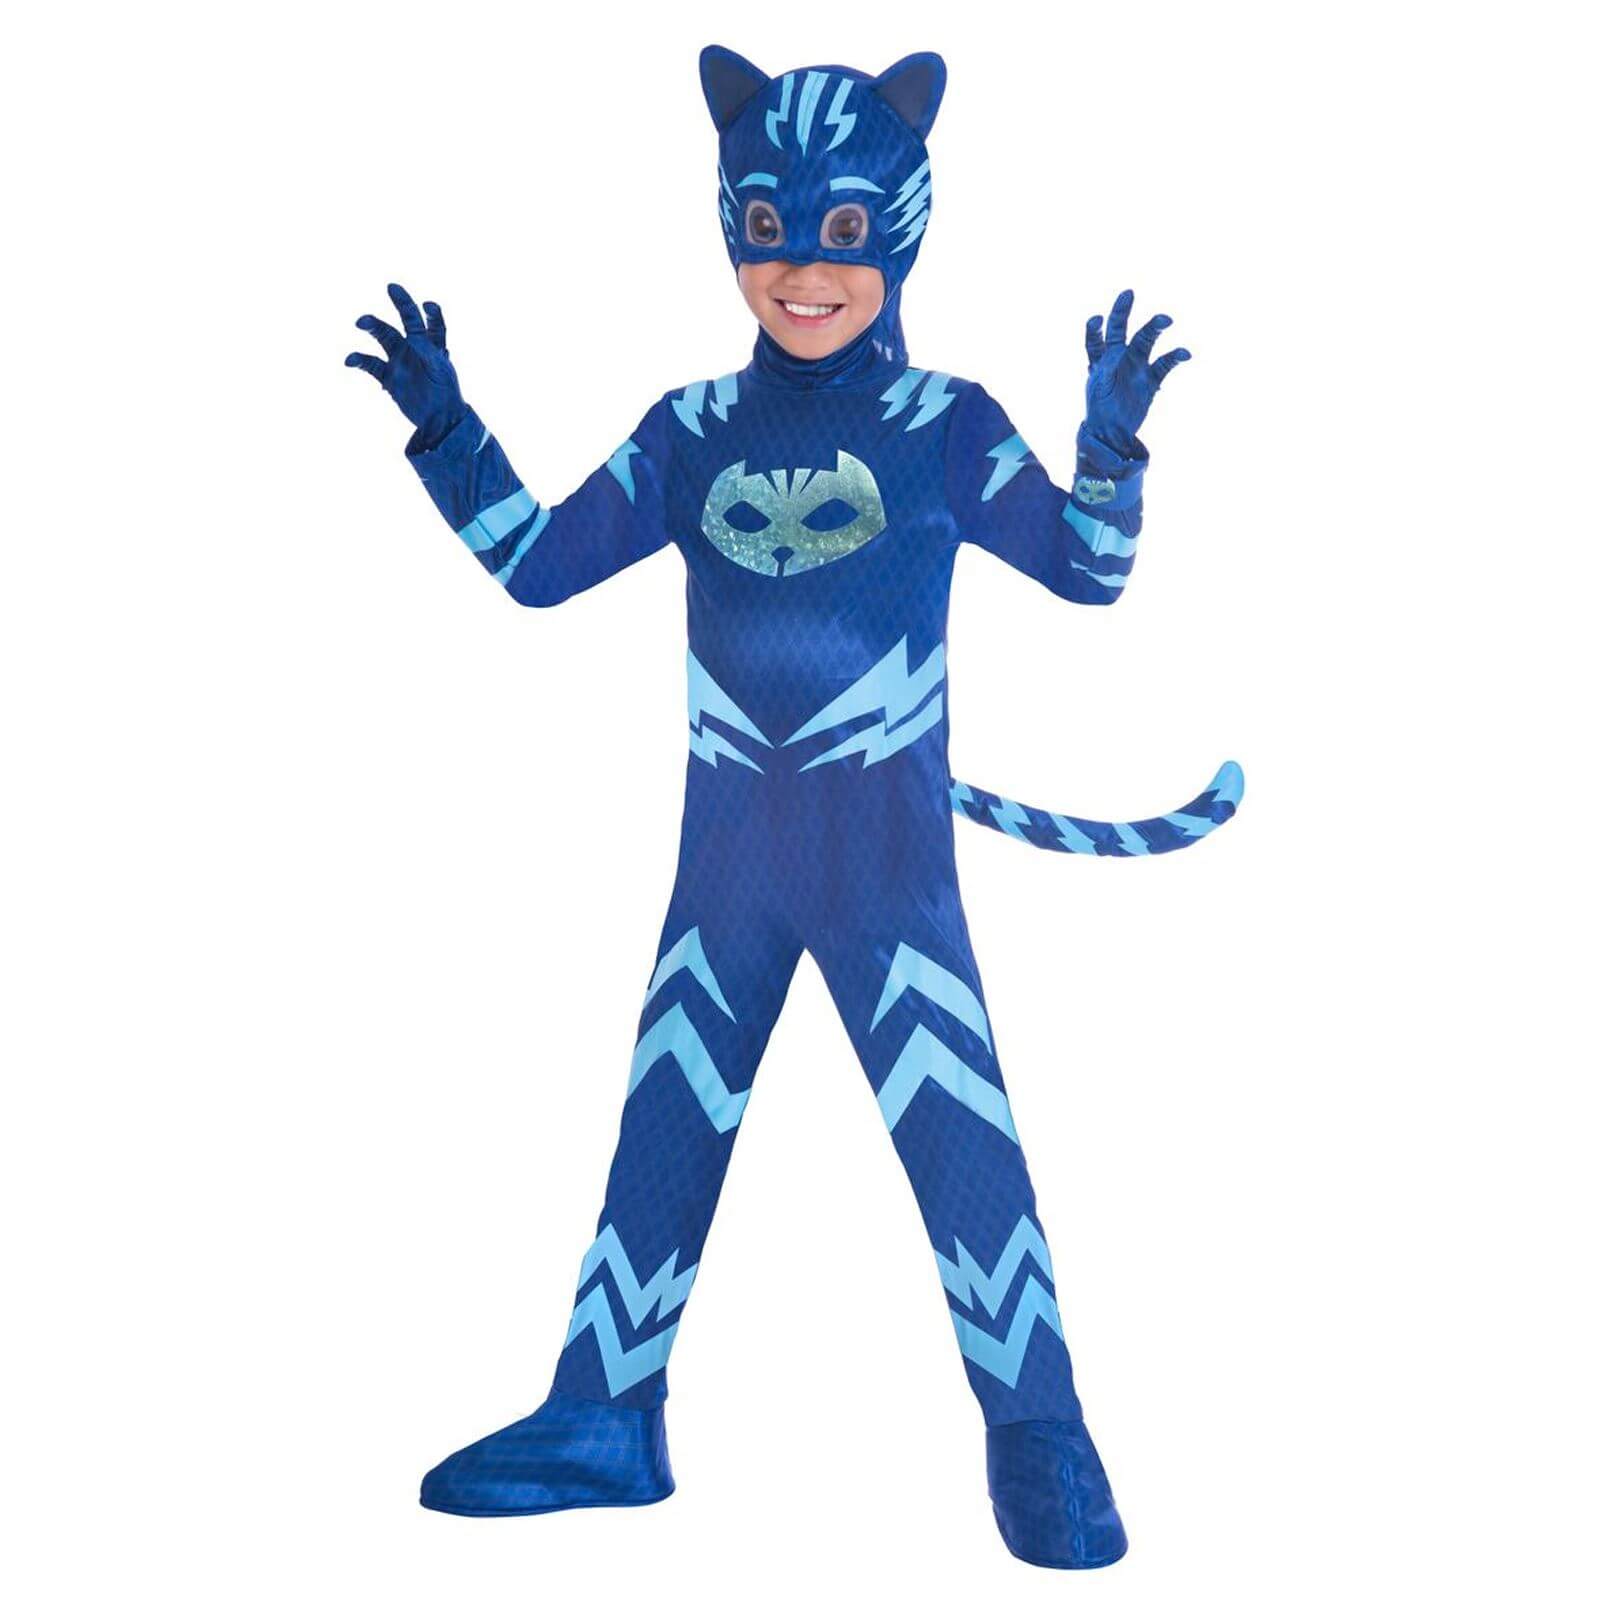 PJ Masks - Catboy: The Agile Hero